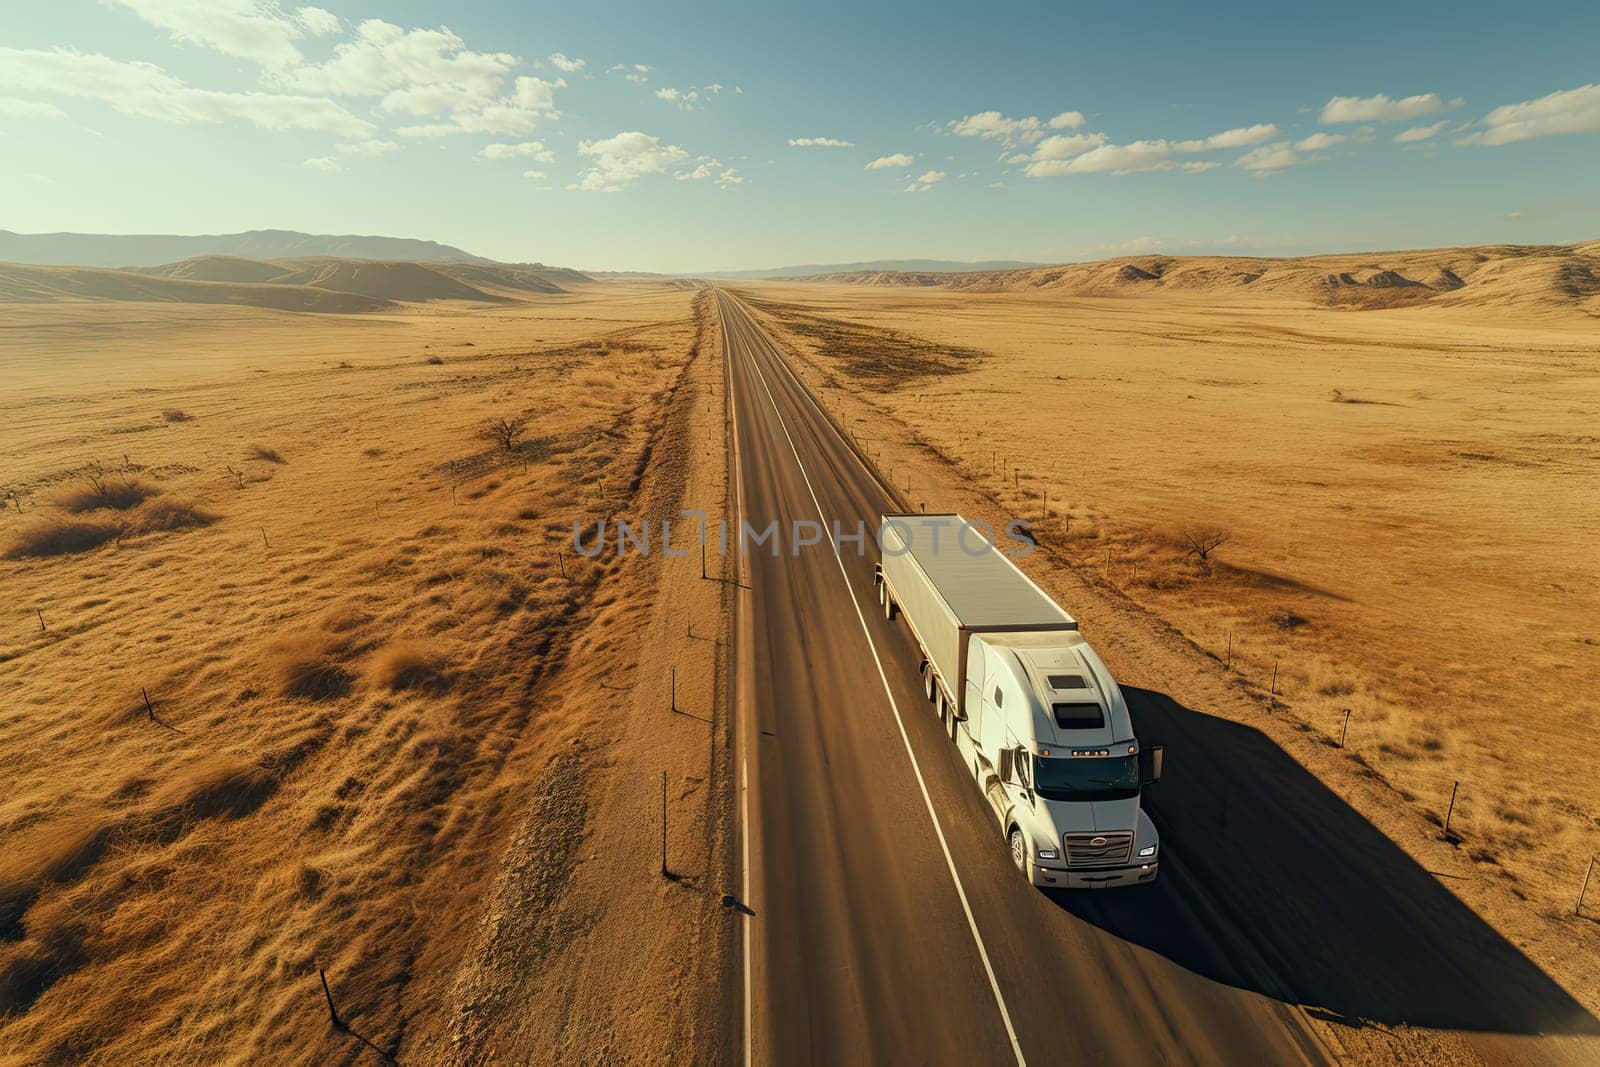 A Lone Truck Journeying Across a Vast Desert Landscape